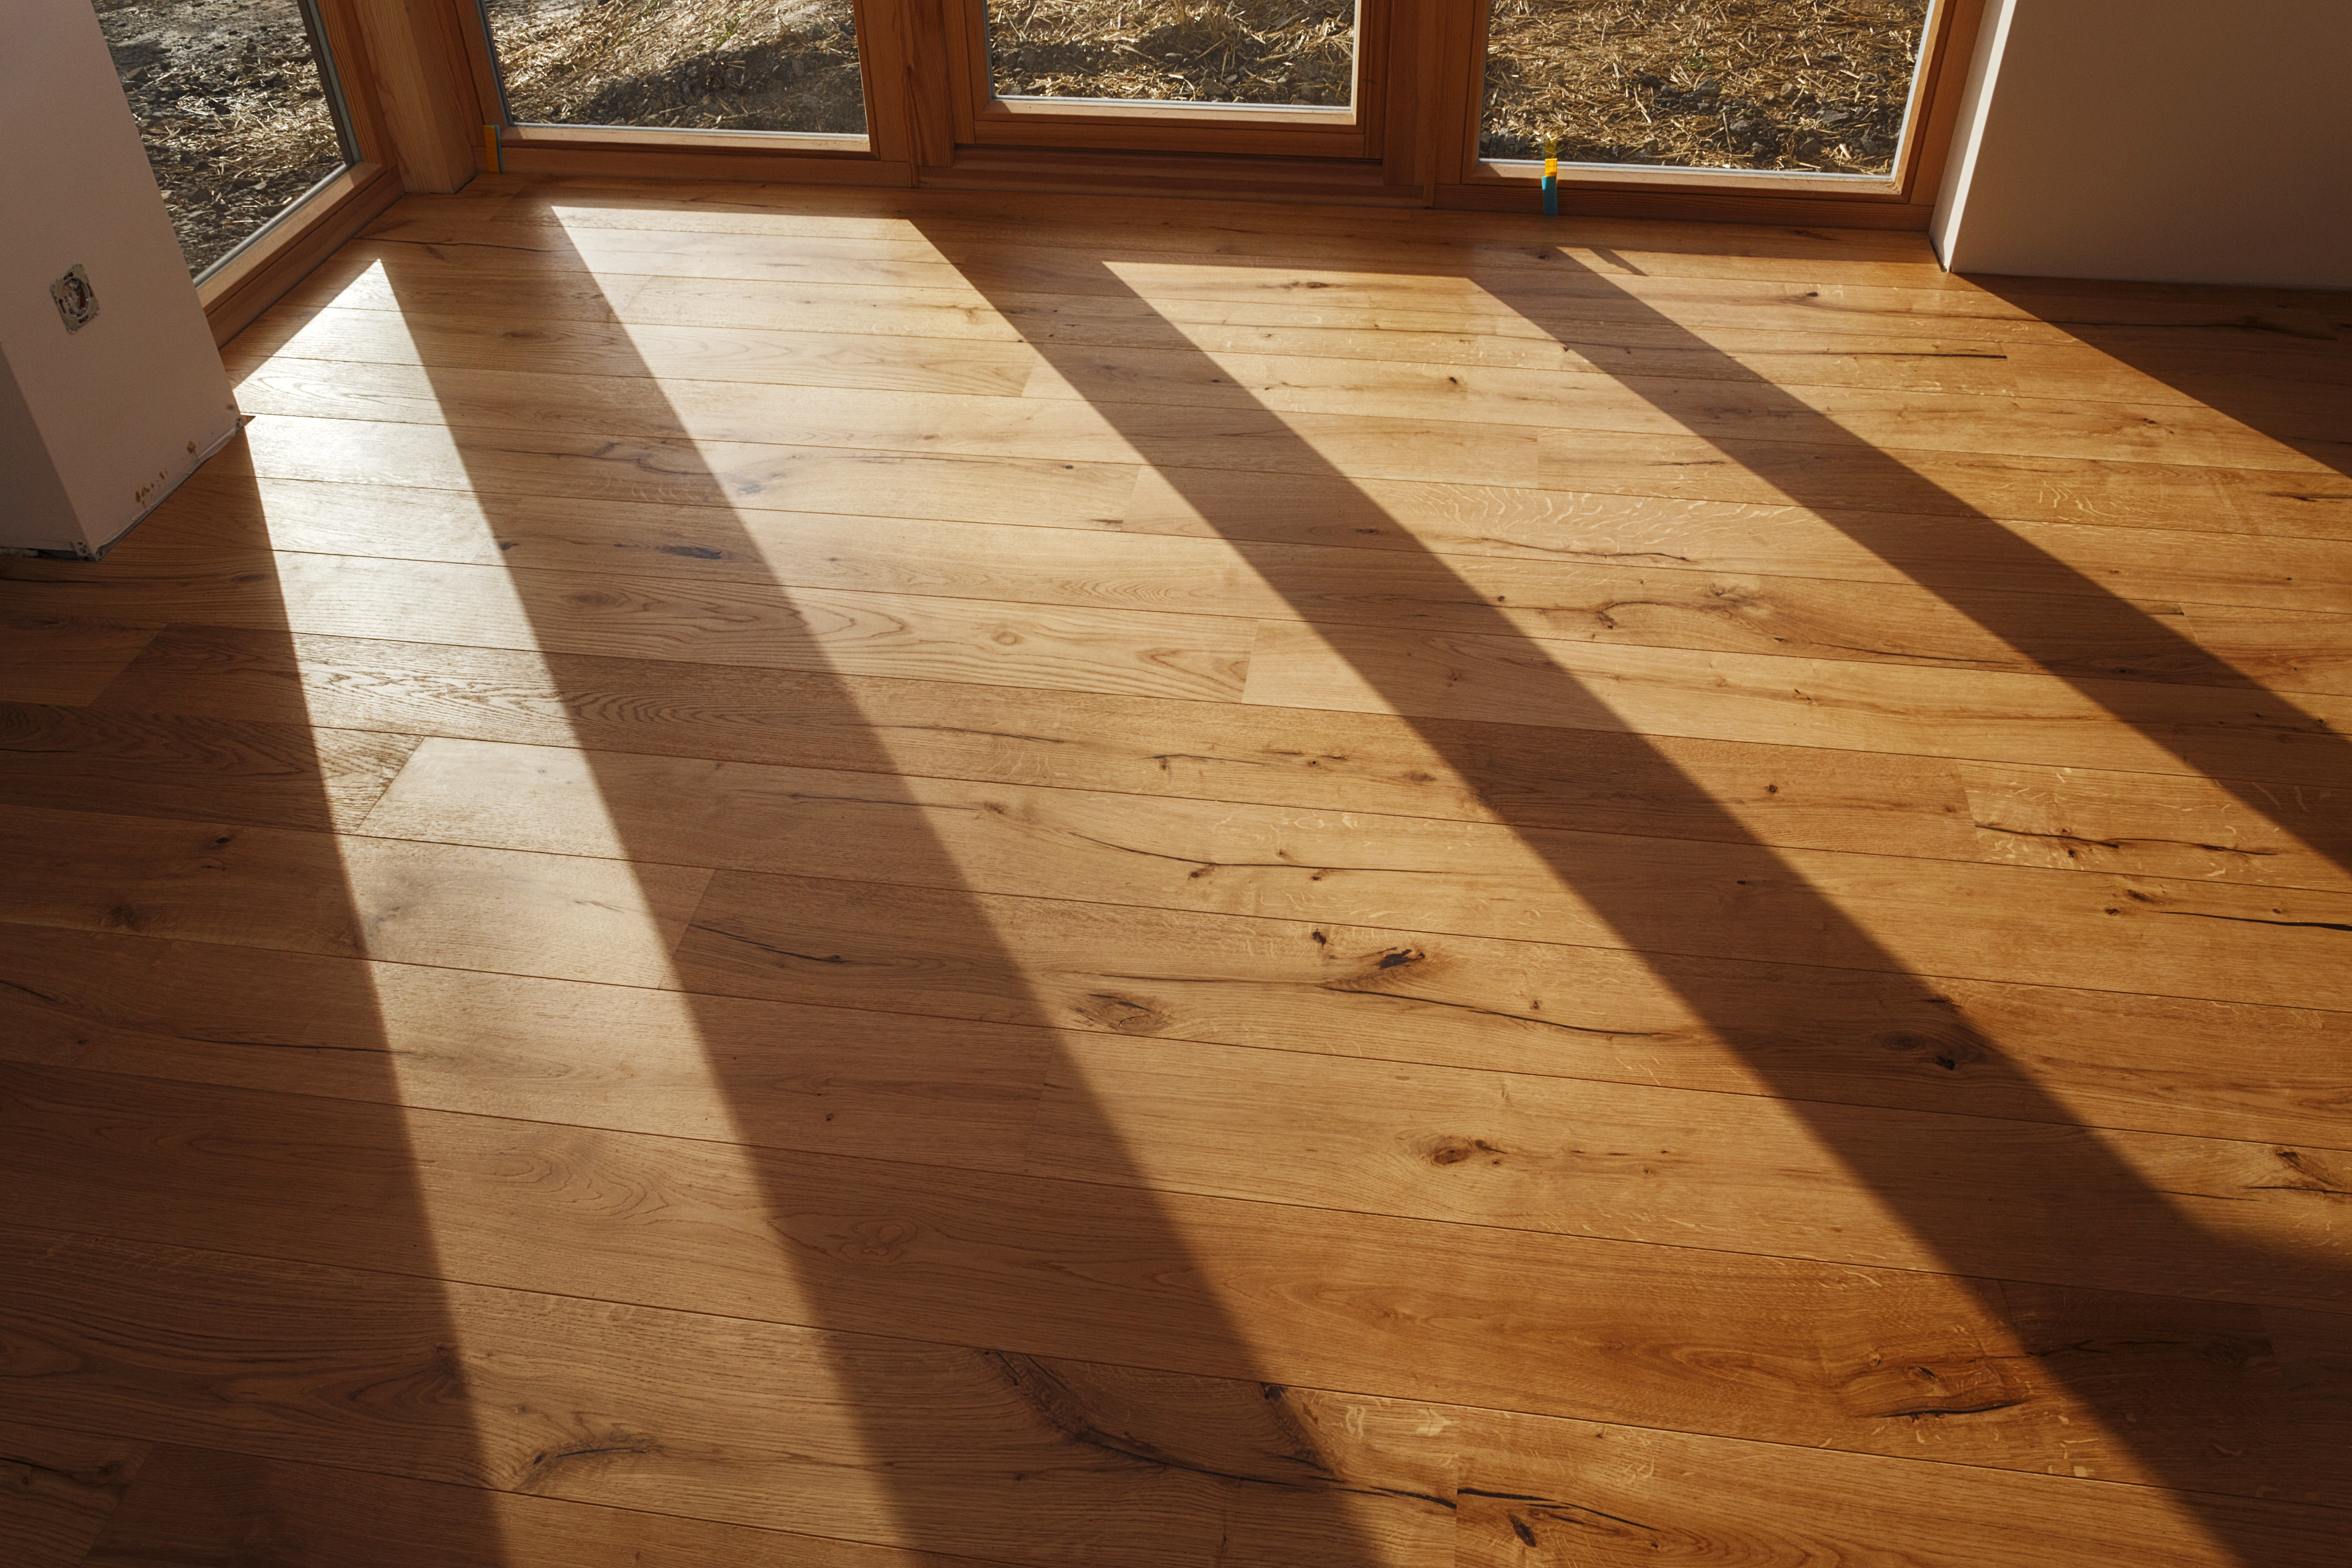 Wood Flooring Hardwood Versus, Best Engineered Wood Flooring For The Money